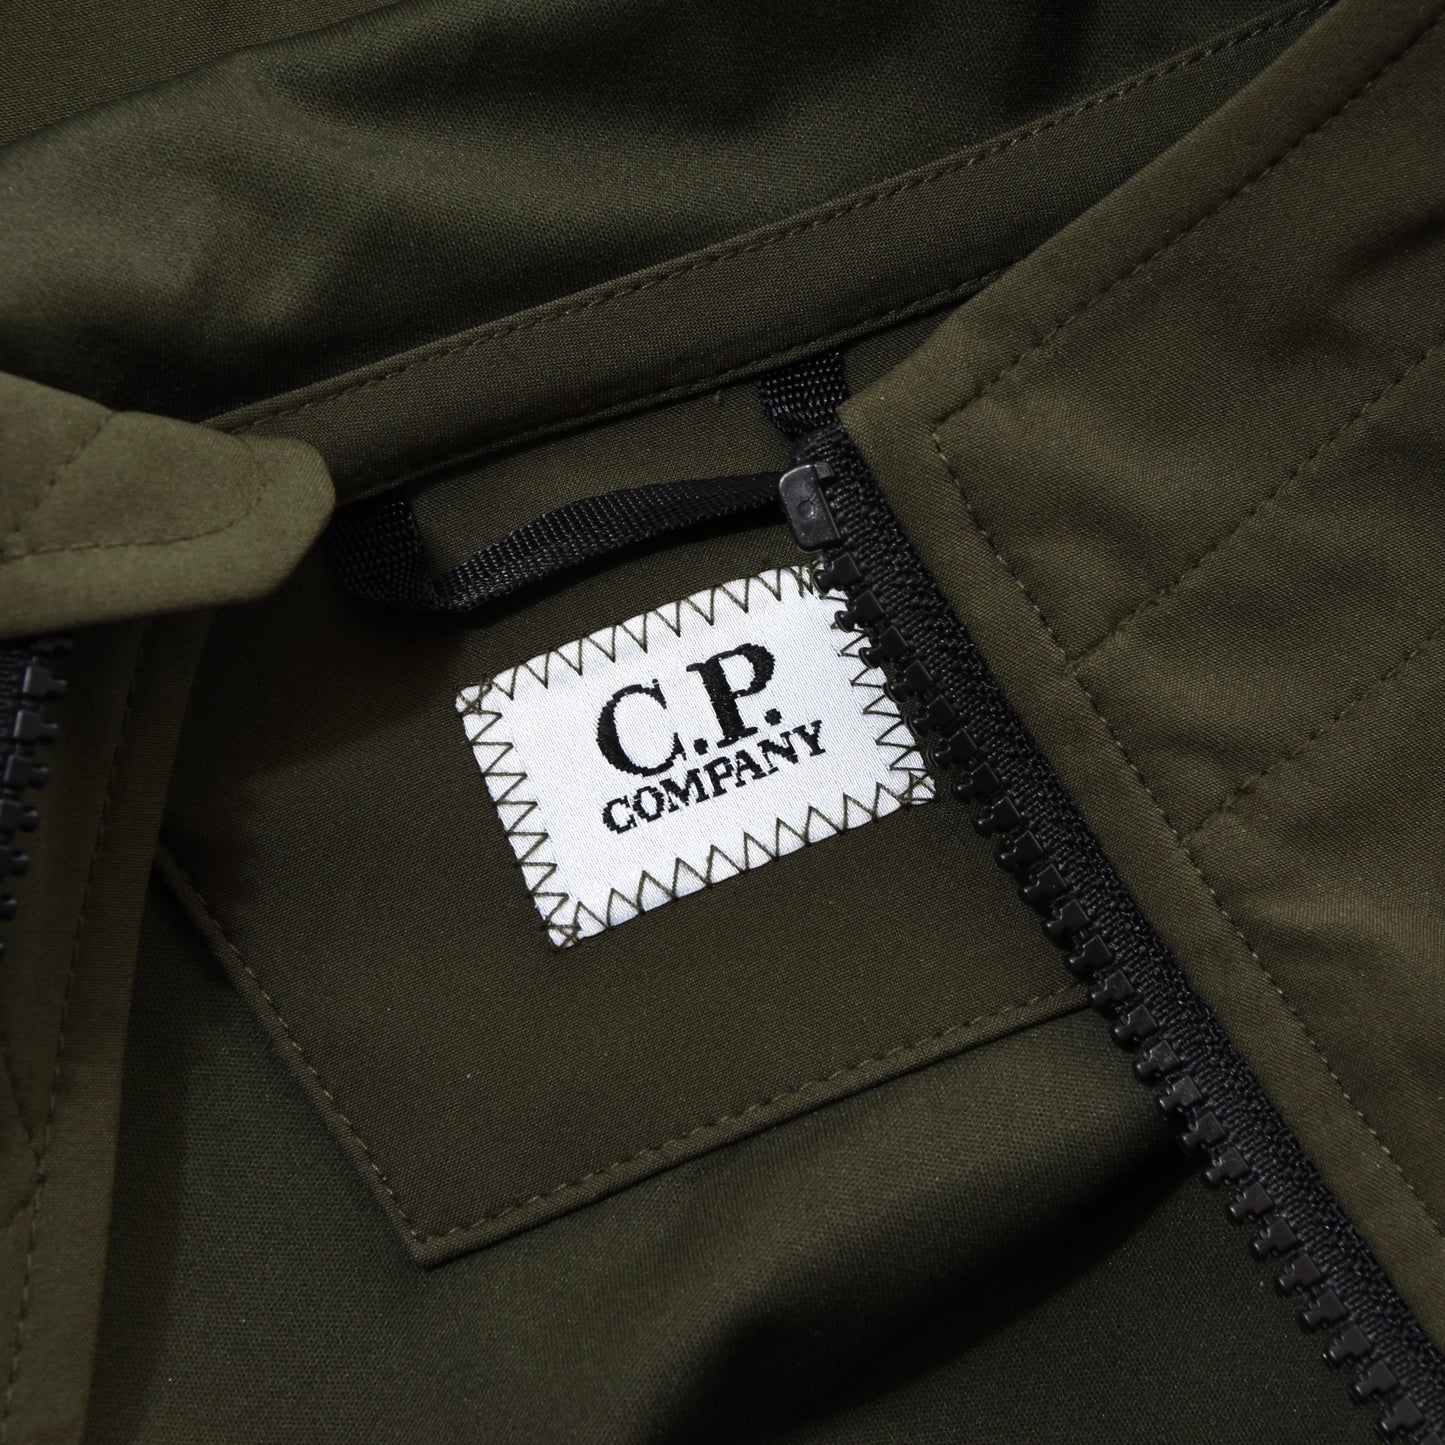 NWT CP Company Goggle Shell R Jacket Size 54 - Green